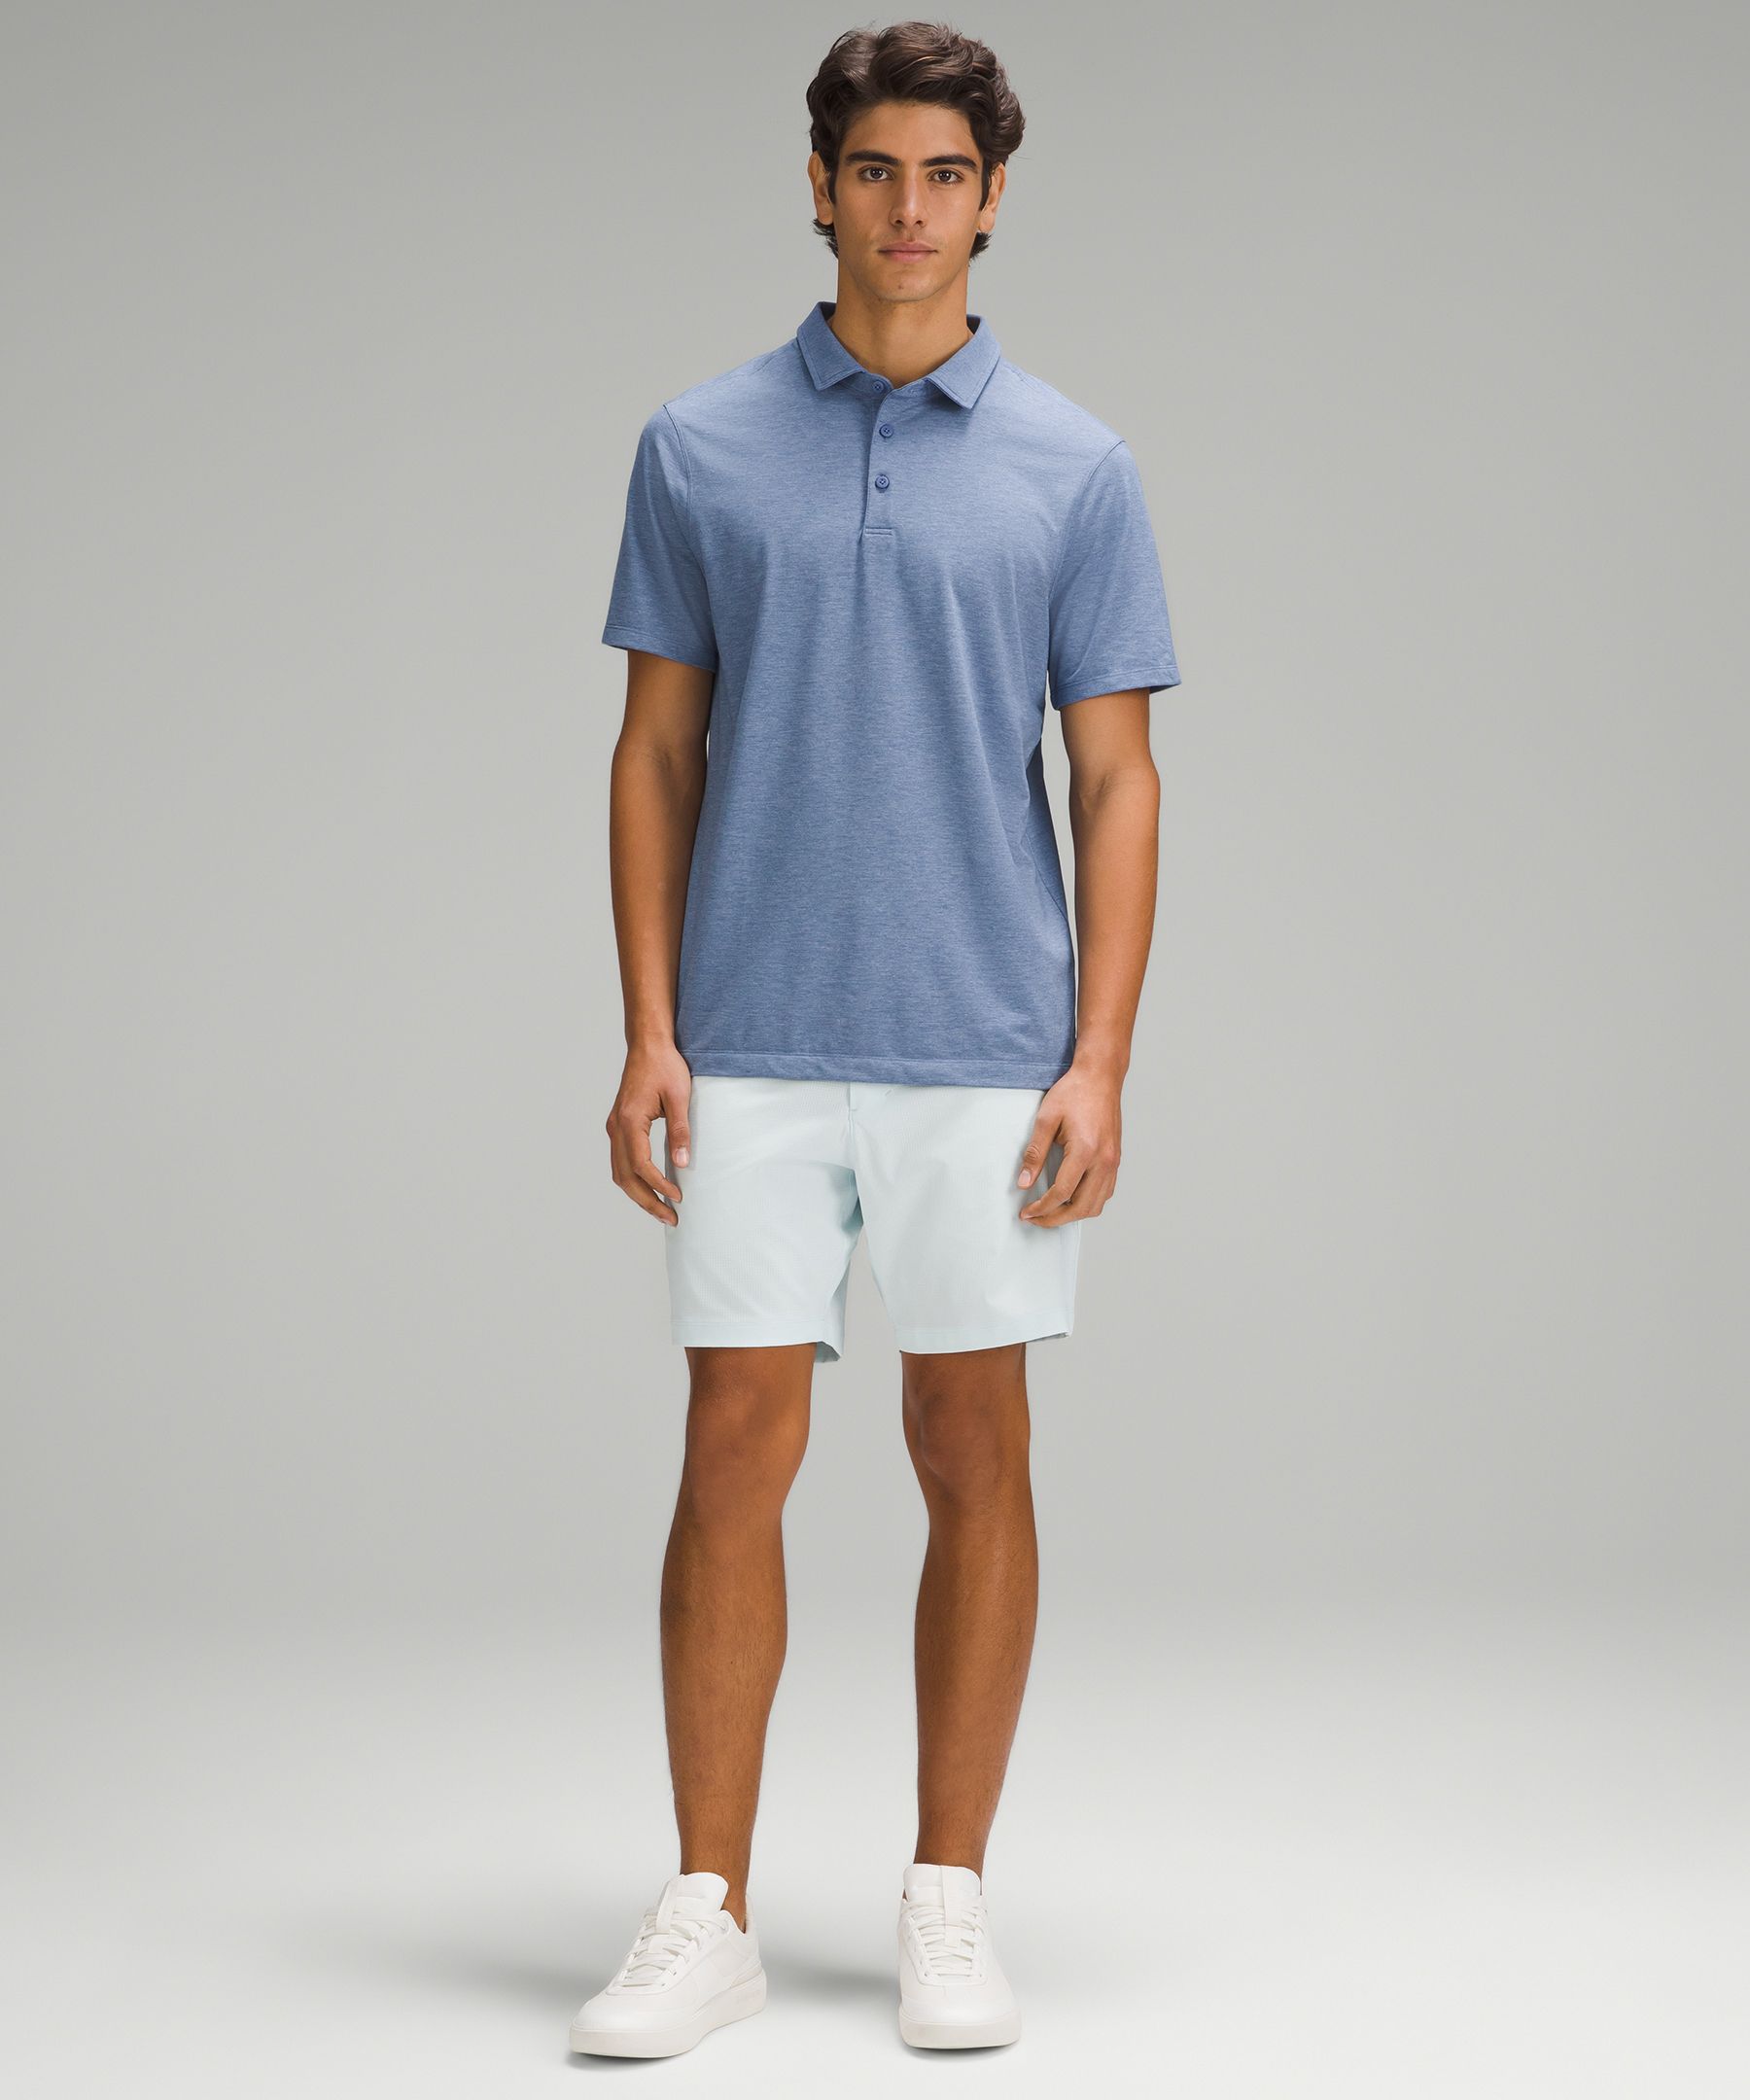 Evolution Short-Sleeve Polo Shirt | Men's Short Sleeve Shirts